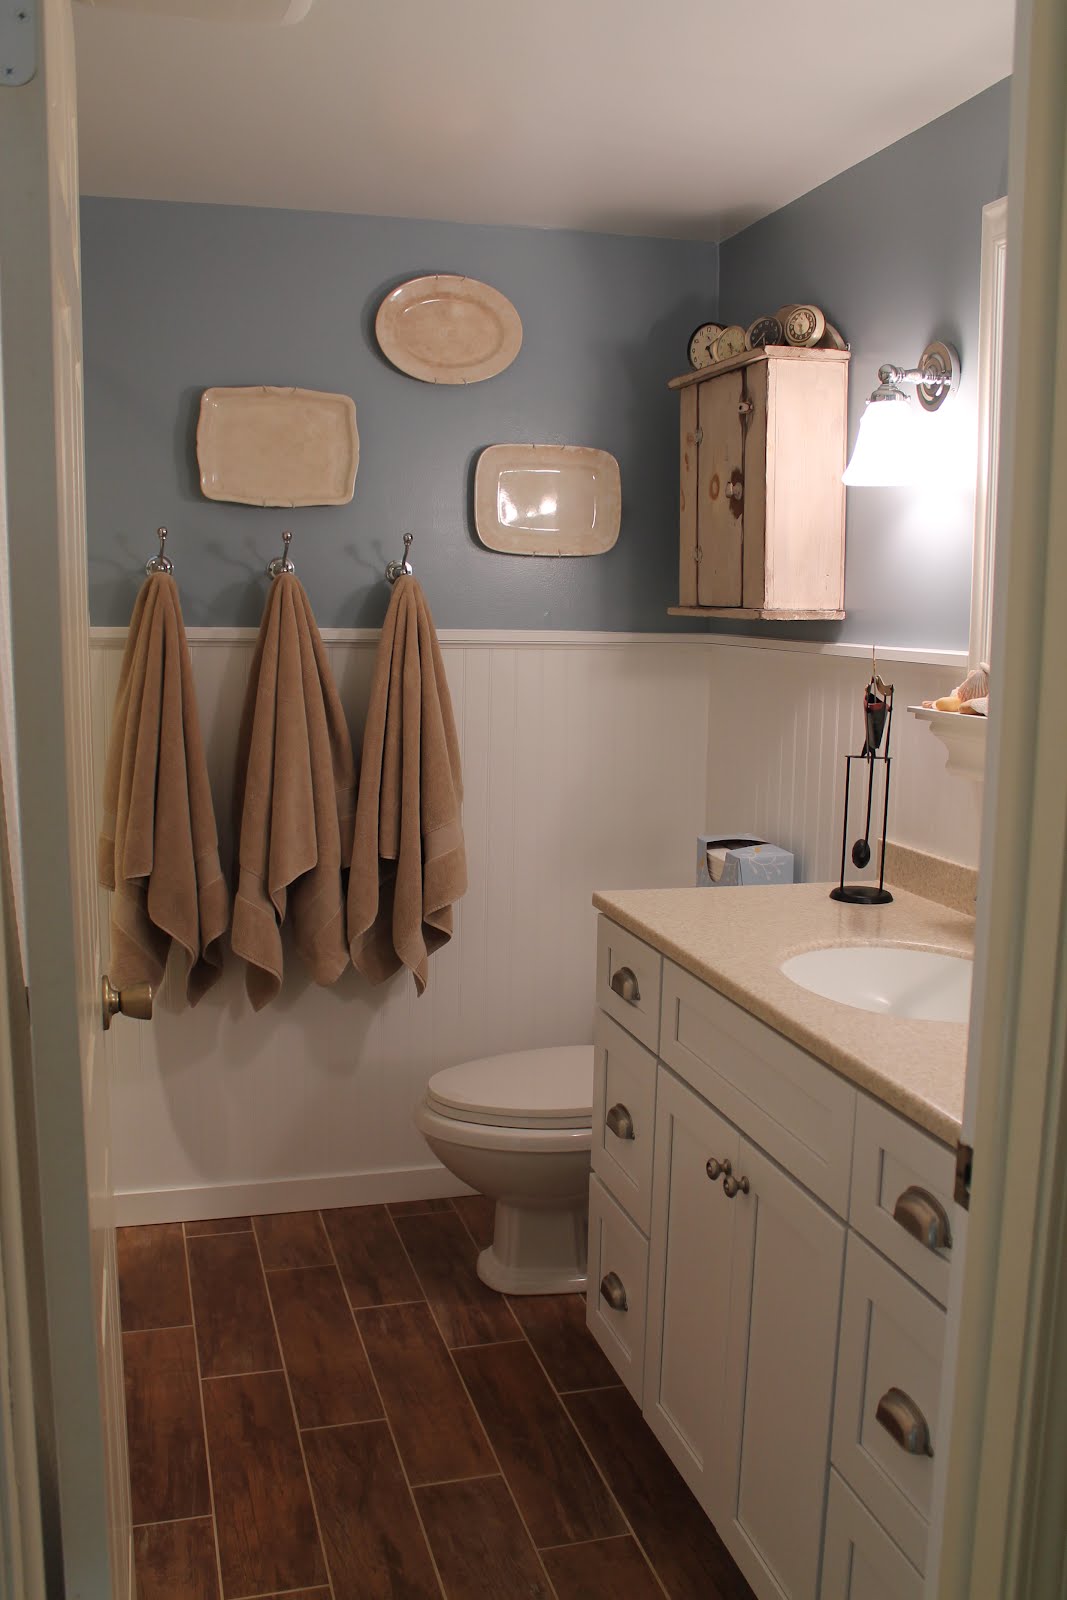 Remodelaholic | Bathroom Renovation with Wood Grain Tile  